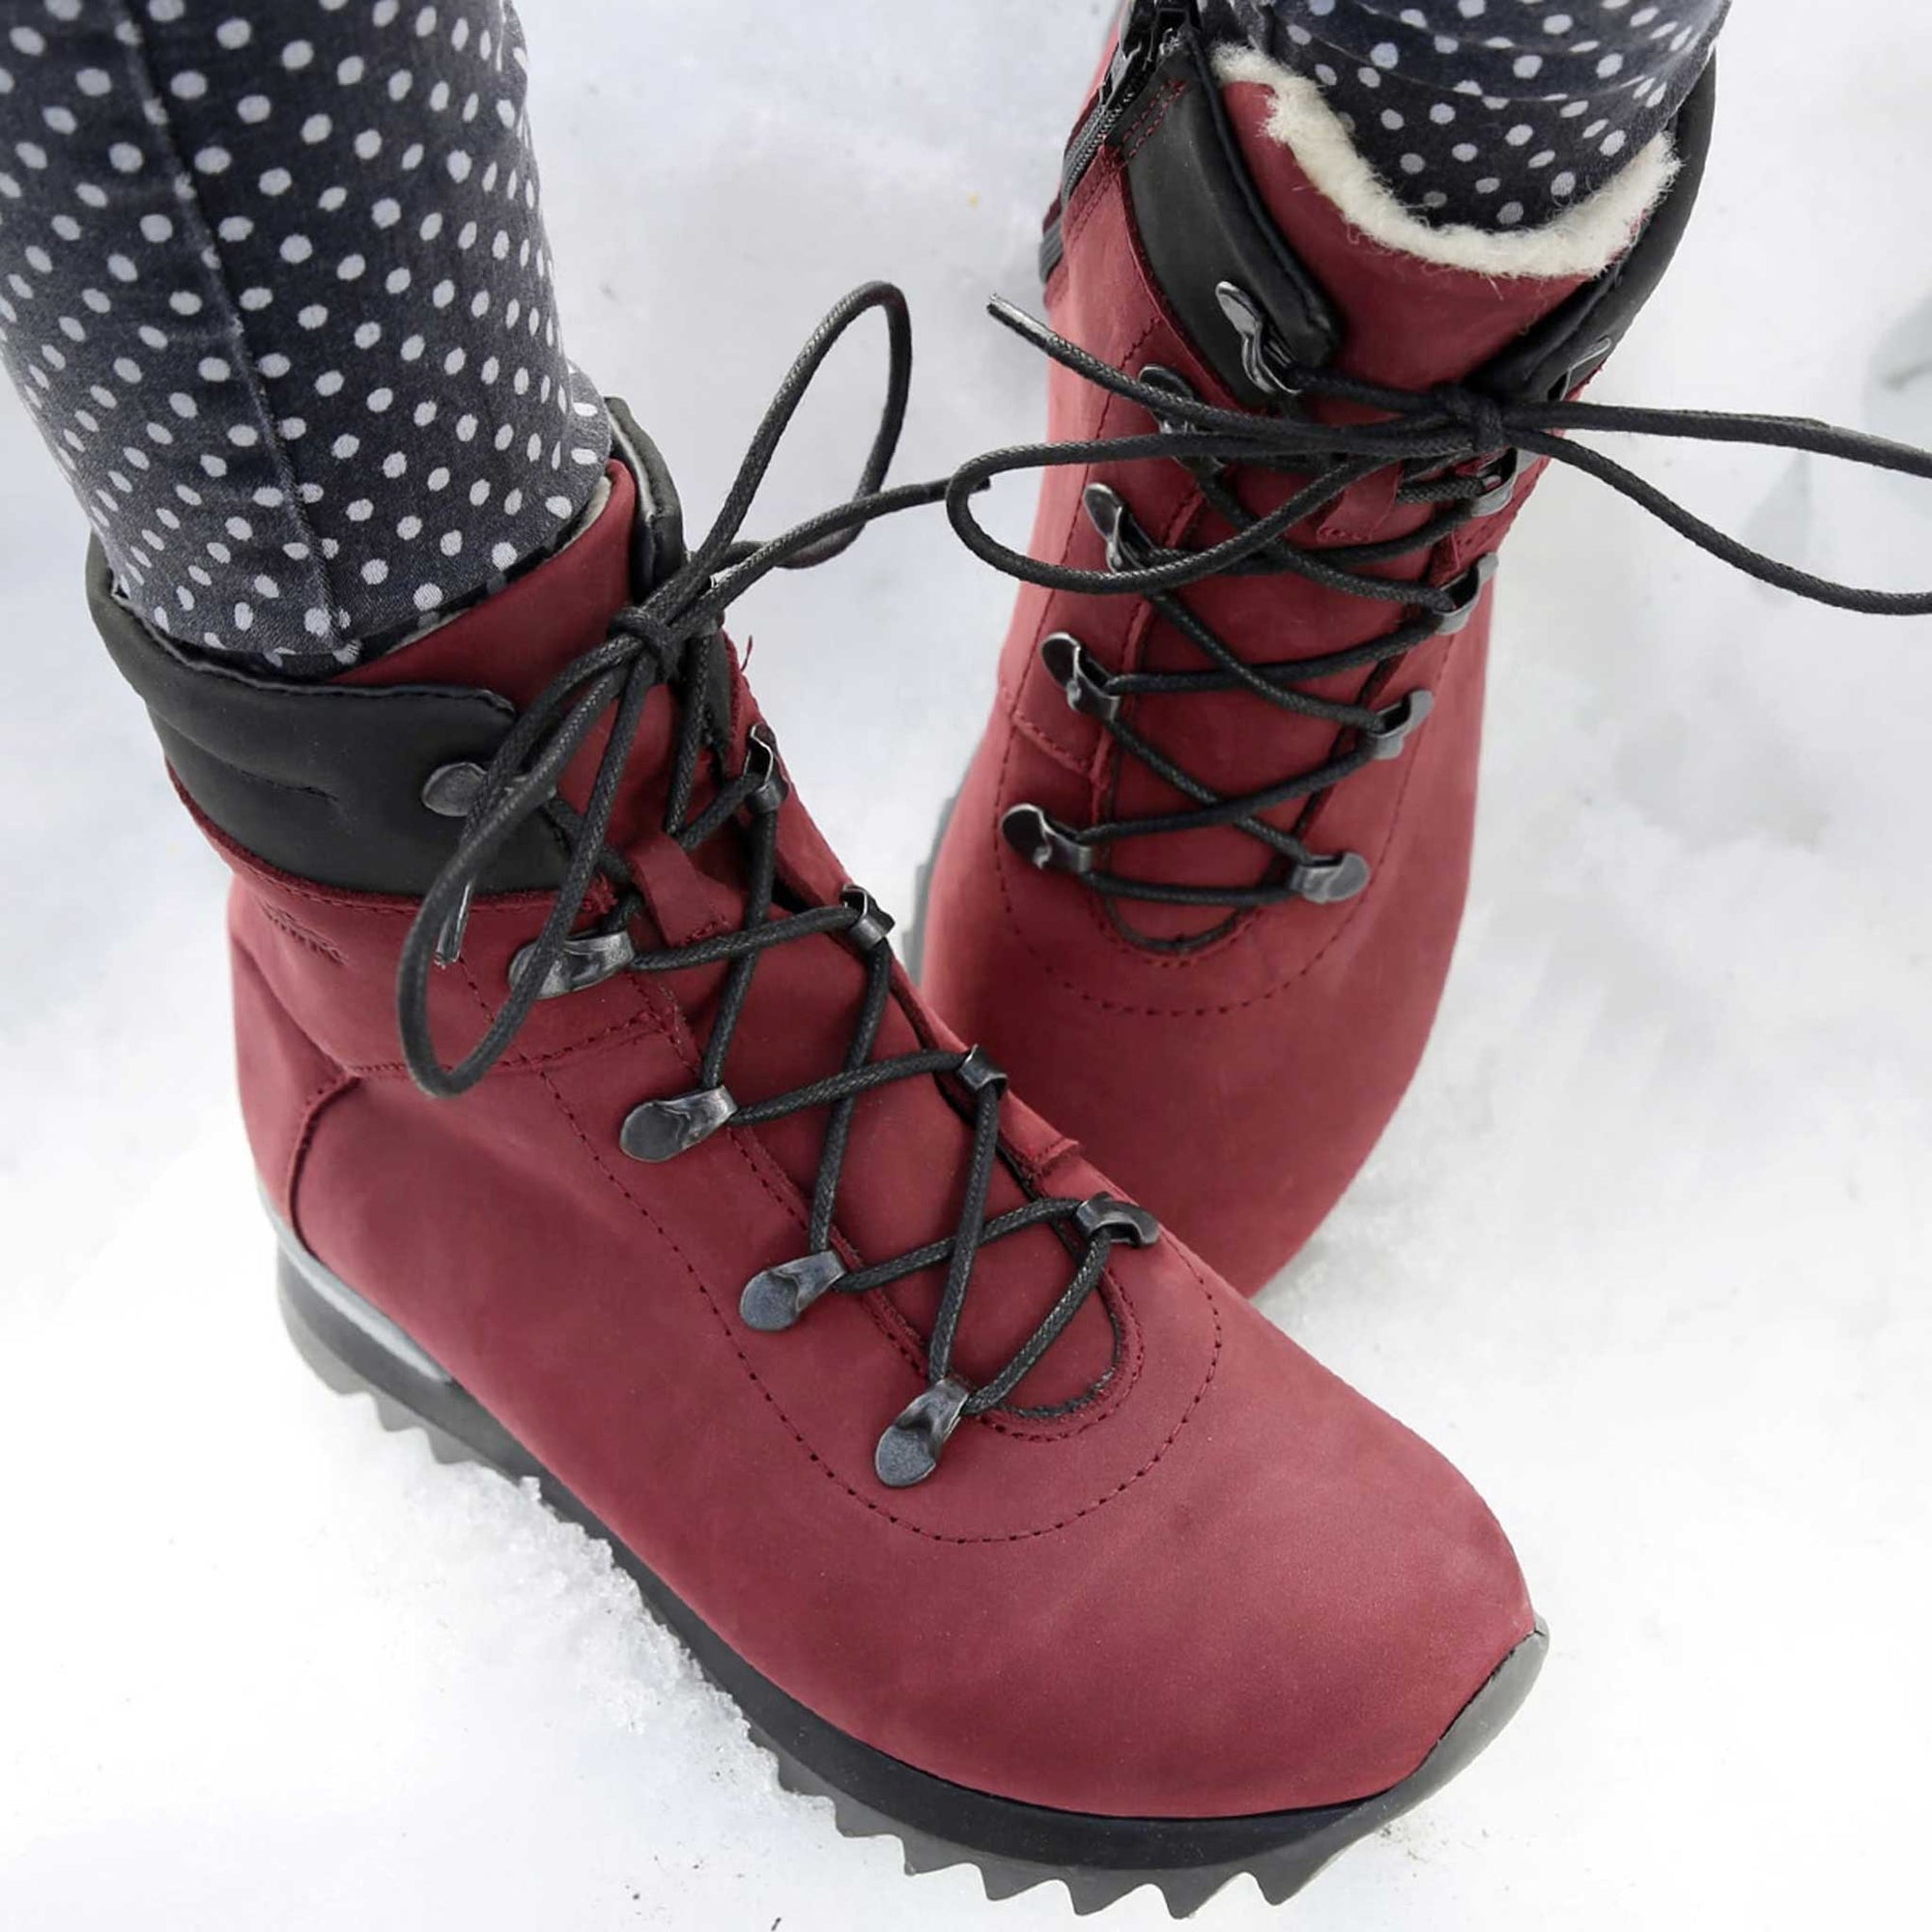 Hike winter boot for women - Black-Sari